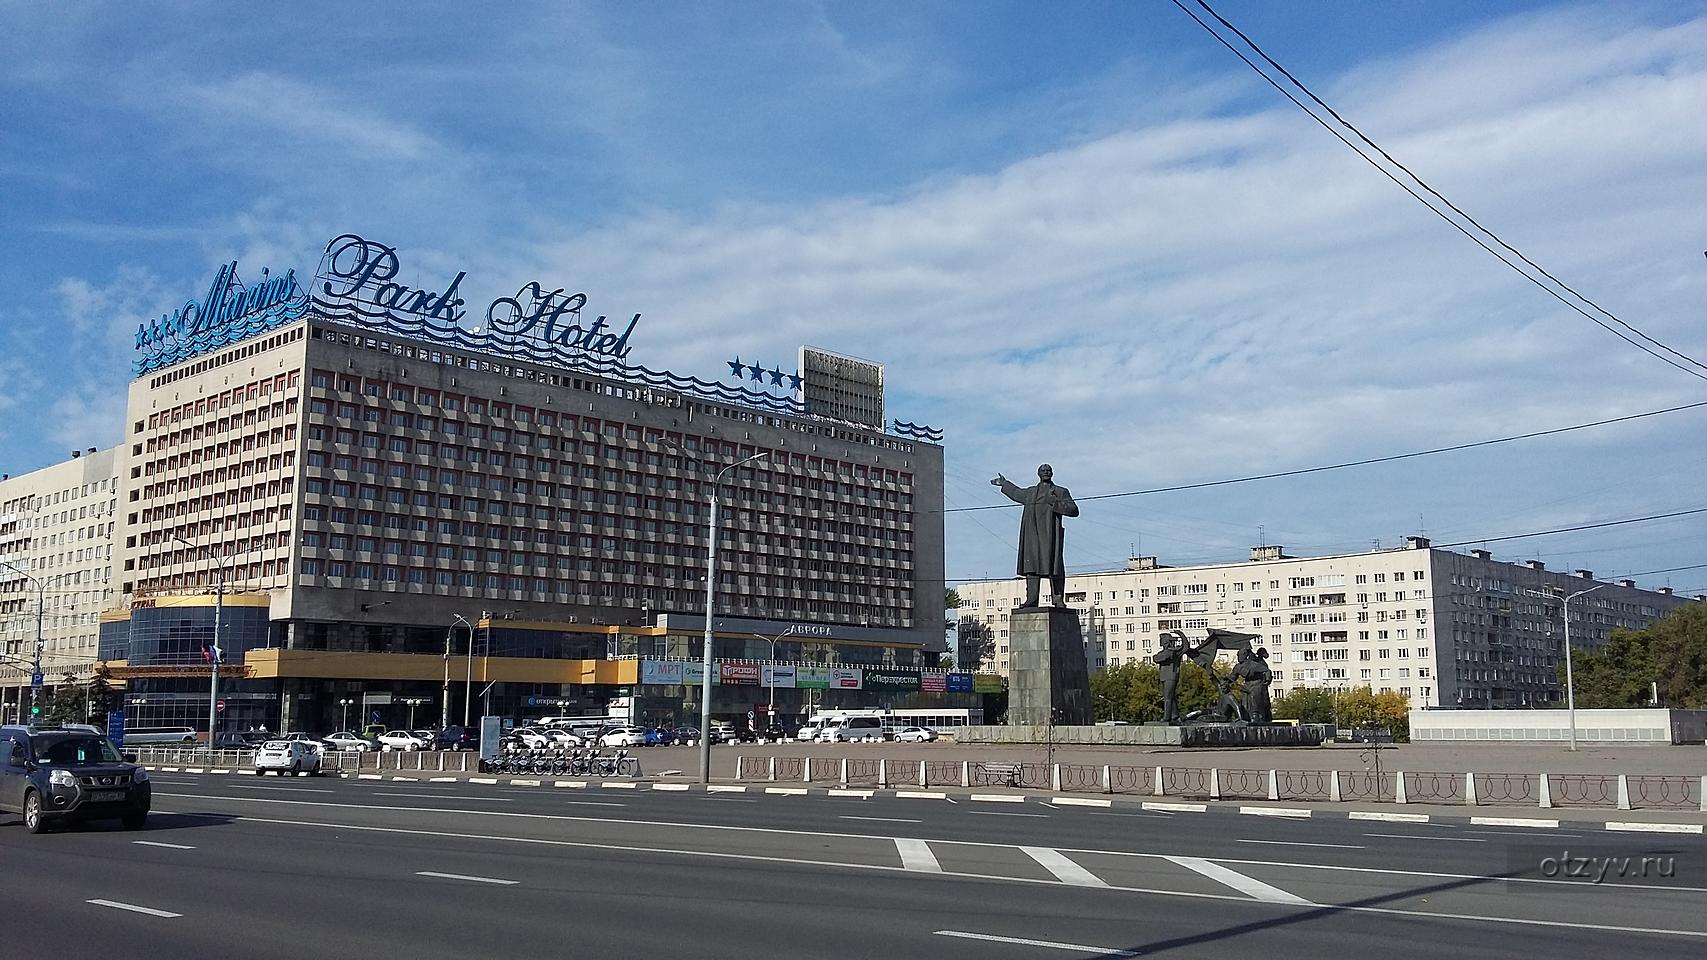 Маринс Парк Отель Нижний Новгород Фото